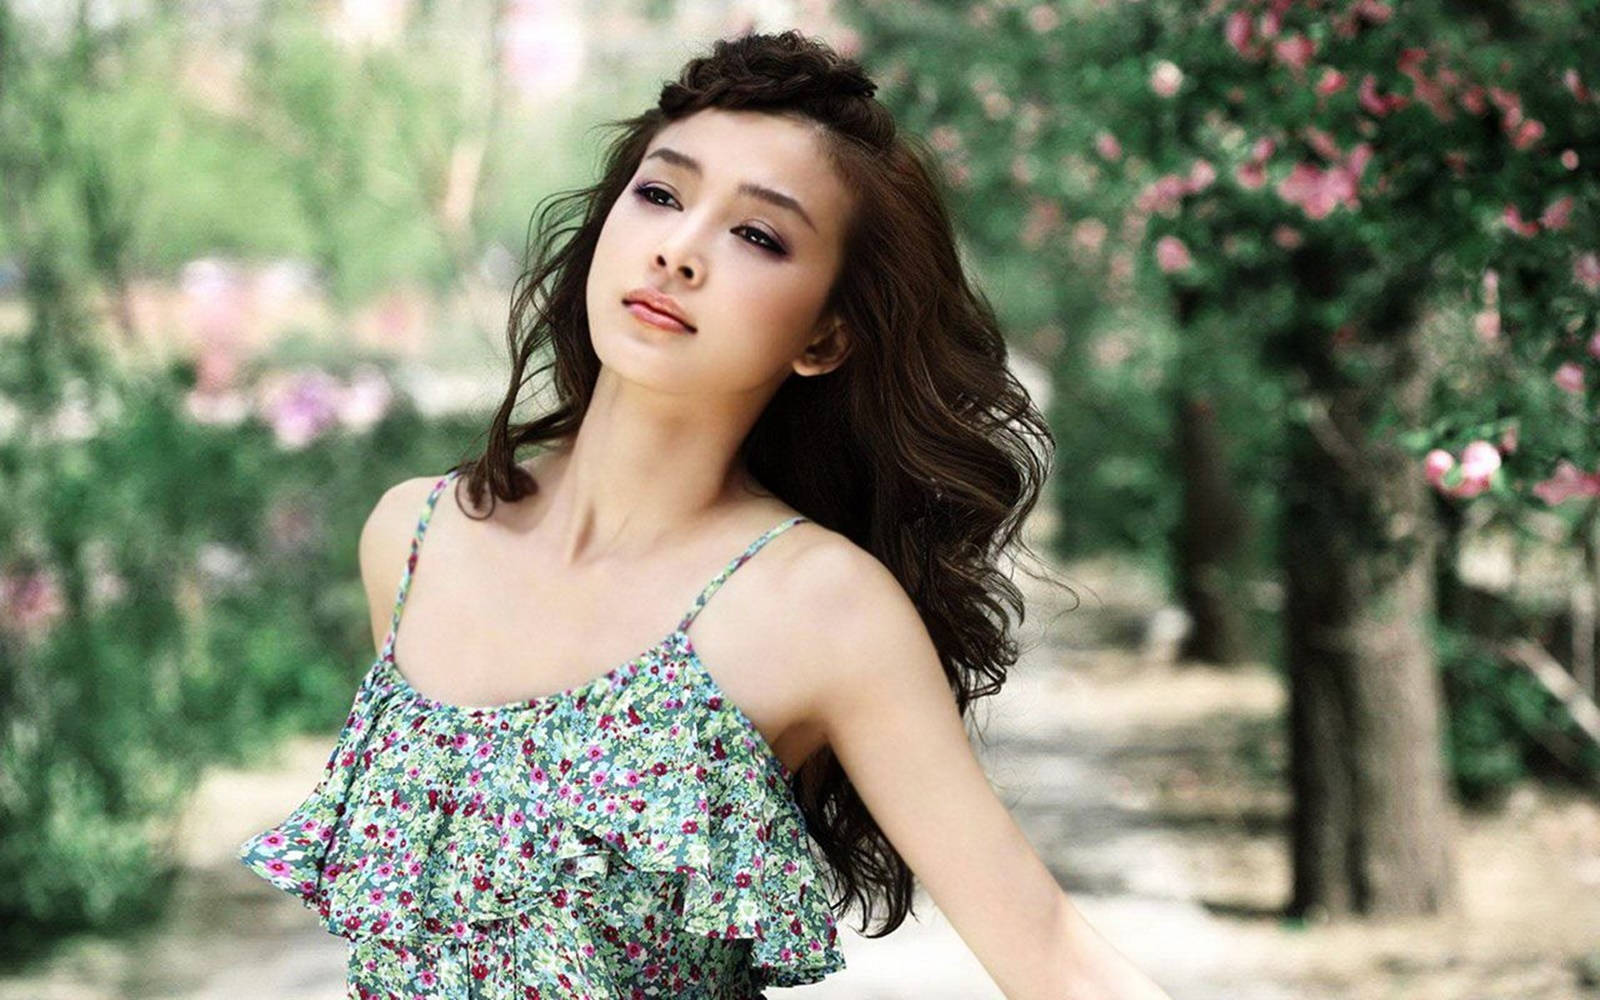 Chinese Girl Xingtong Yao Background